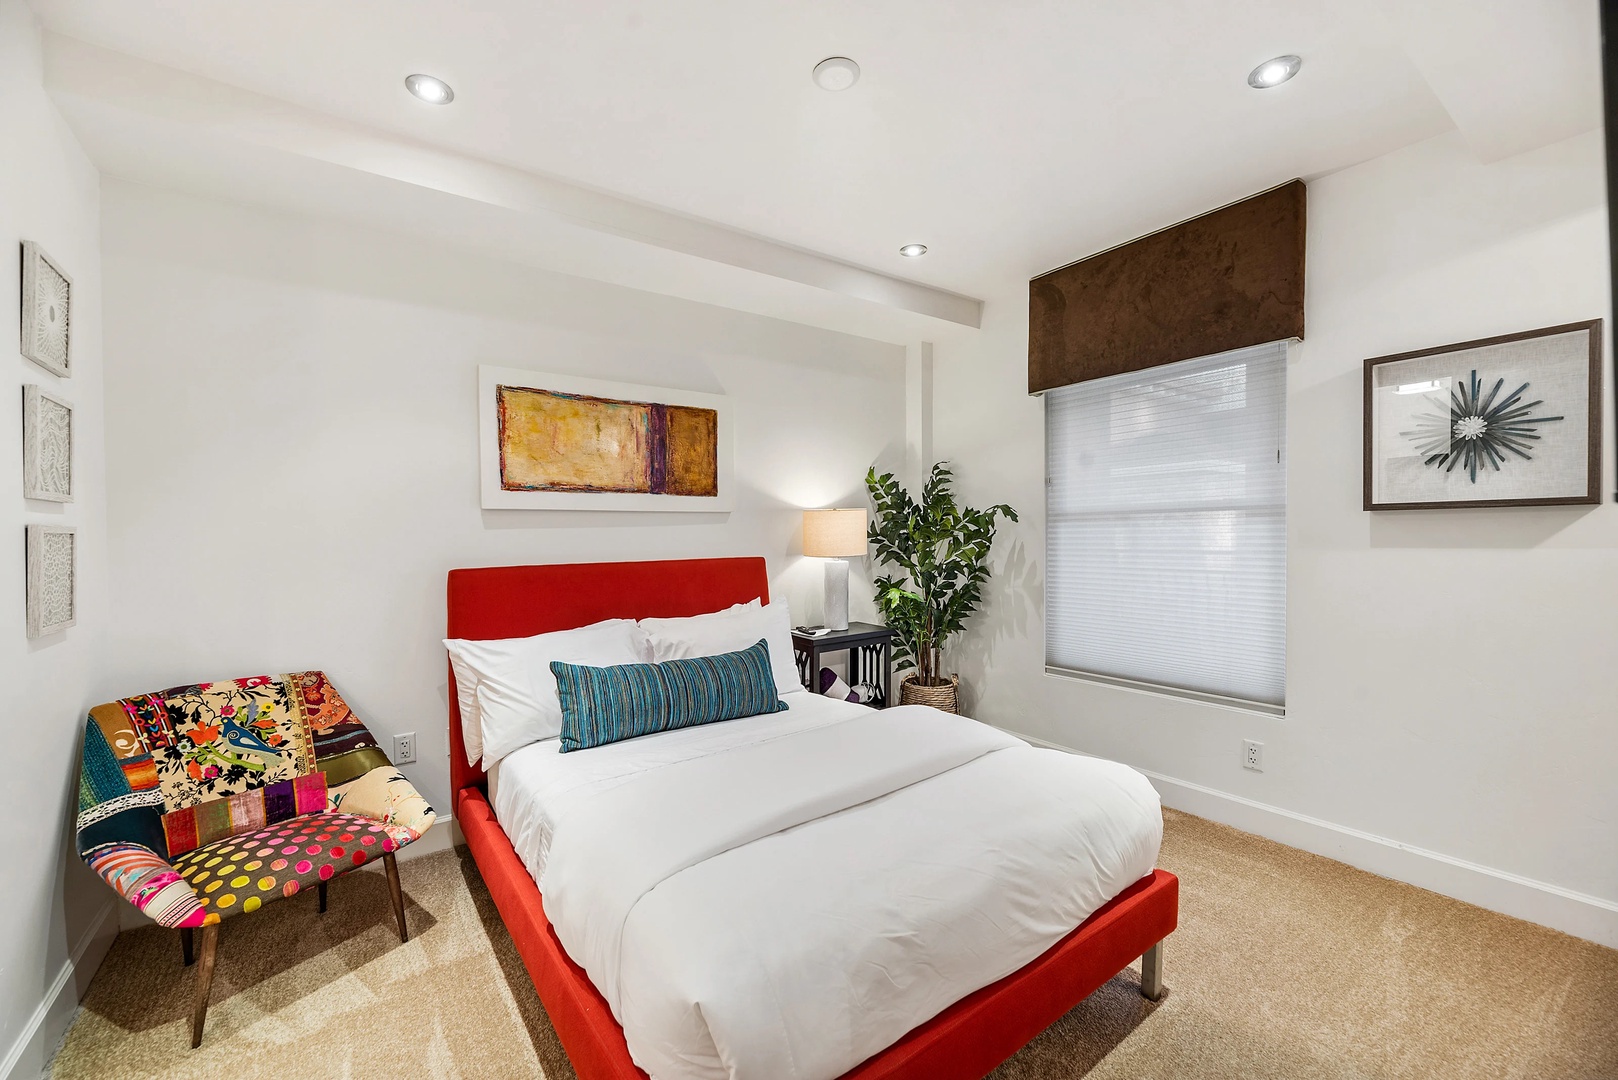 La Jolla Vacation Rentals, Montefaro in the Village of La Jolla - Third bedroom with queen bed nicely styled